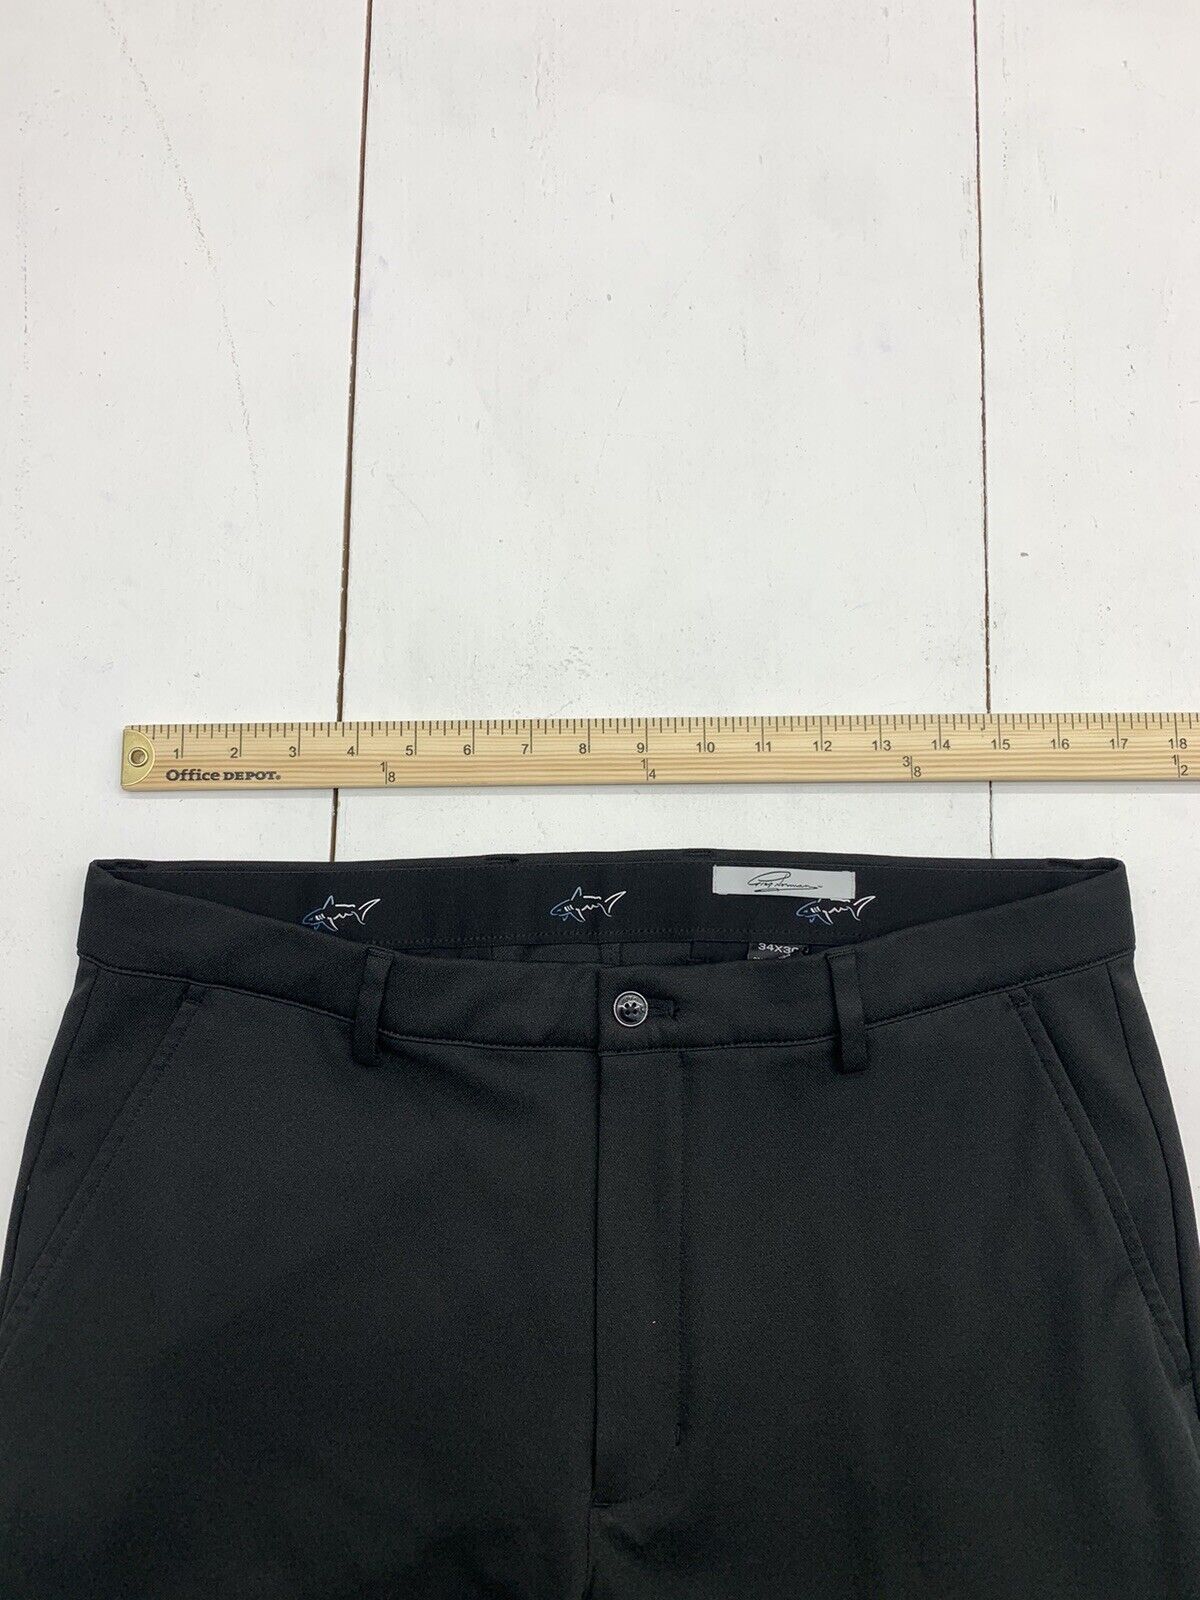 Greg Norman Men's 34x32 5 Pocket Travel Pant Black